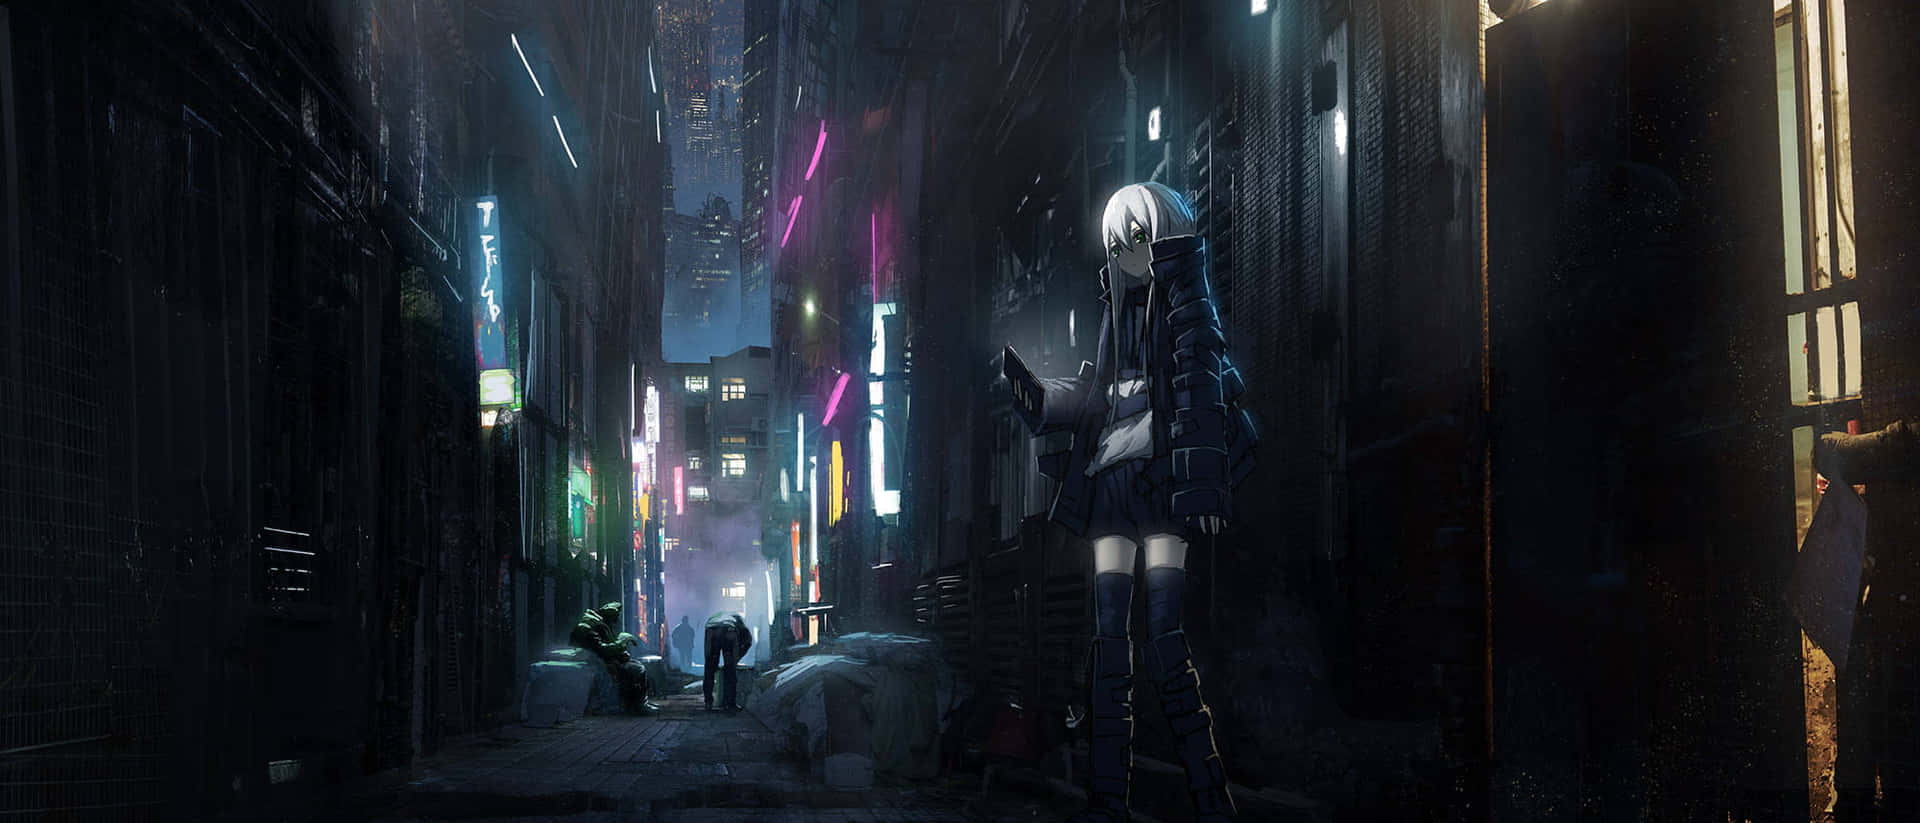 Night Scenery In Dark Aesthetic Anime Wallpaper